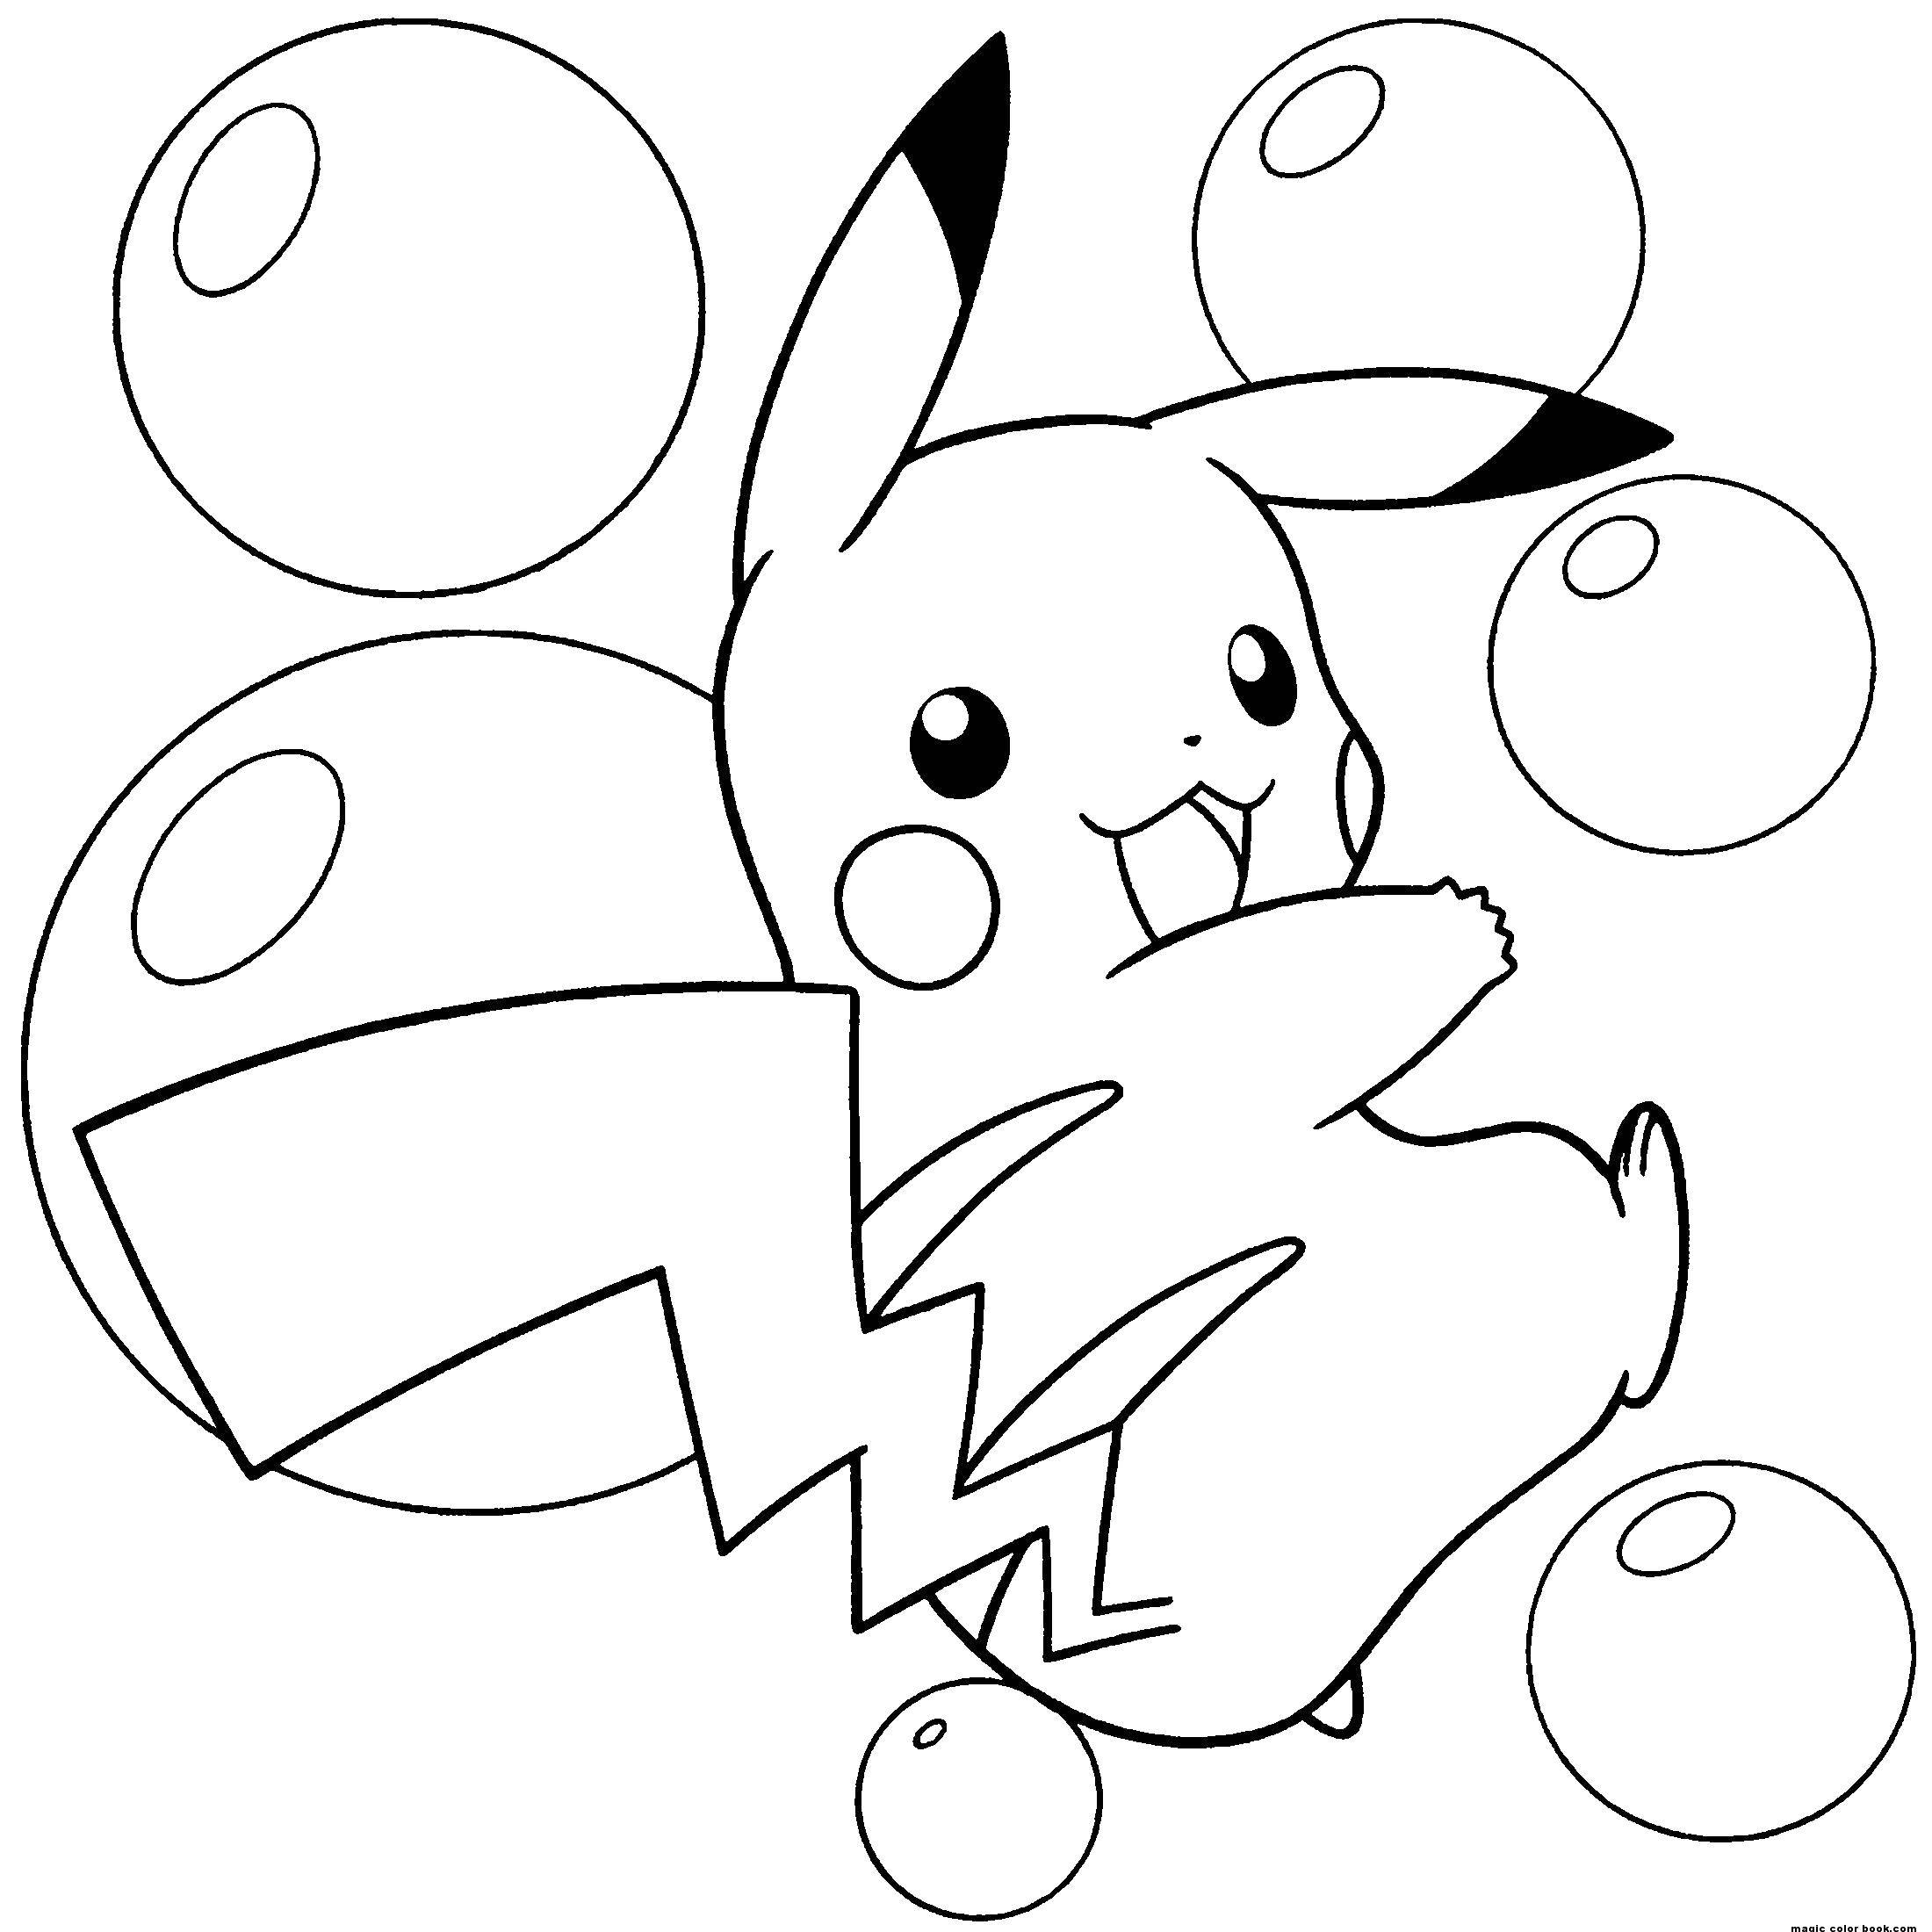 Coloring Pikachu and bubbles. Category Pokemon. Tags:  Pikachu, lightning, bubbles.